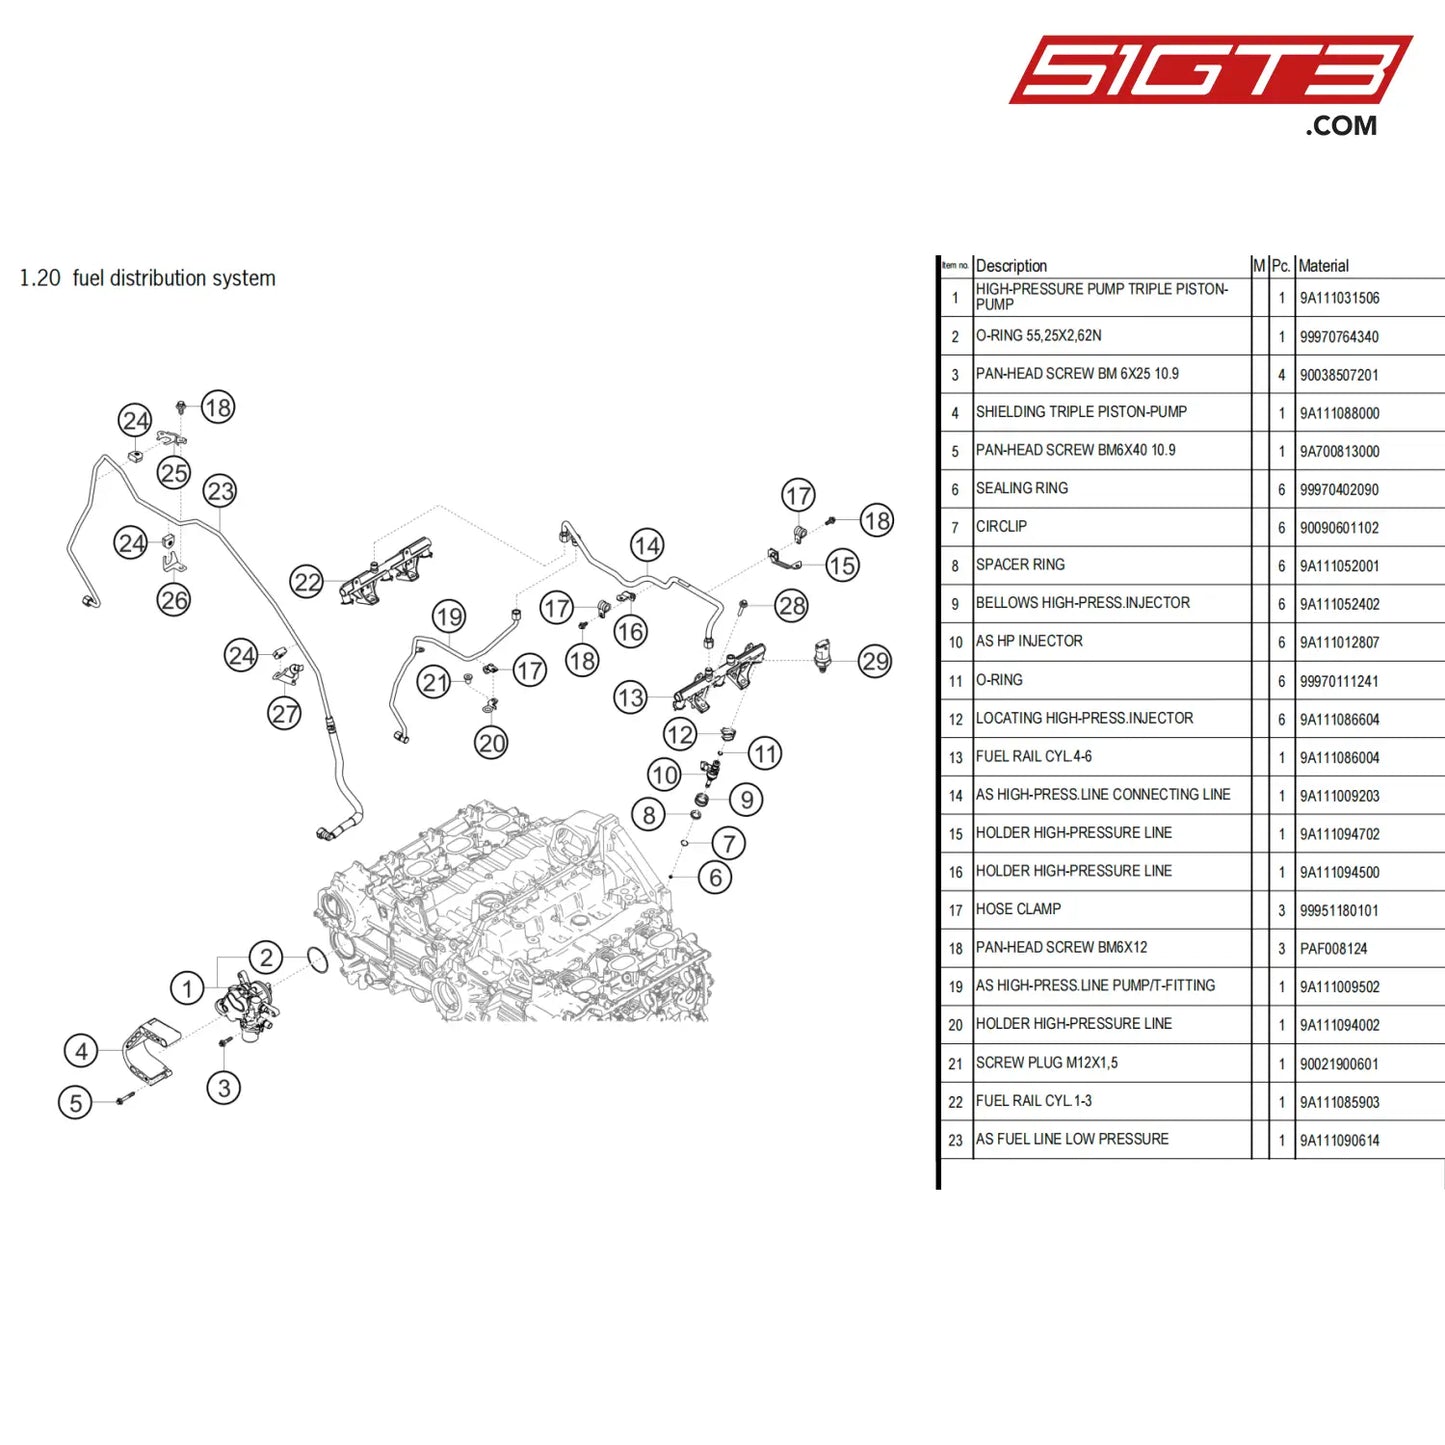 Screw Plug M12X1 5 - 90021900601 [Porsche 718 Cayman Gt4 Clubsport] Fuel Distribution System